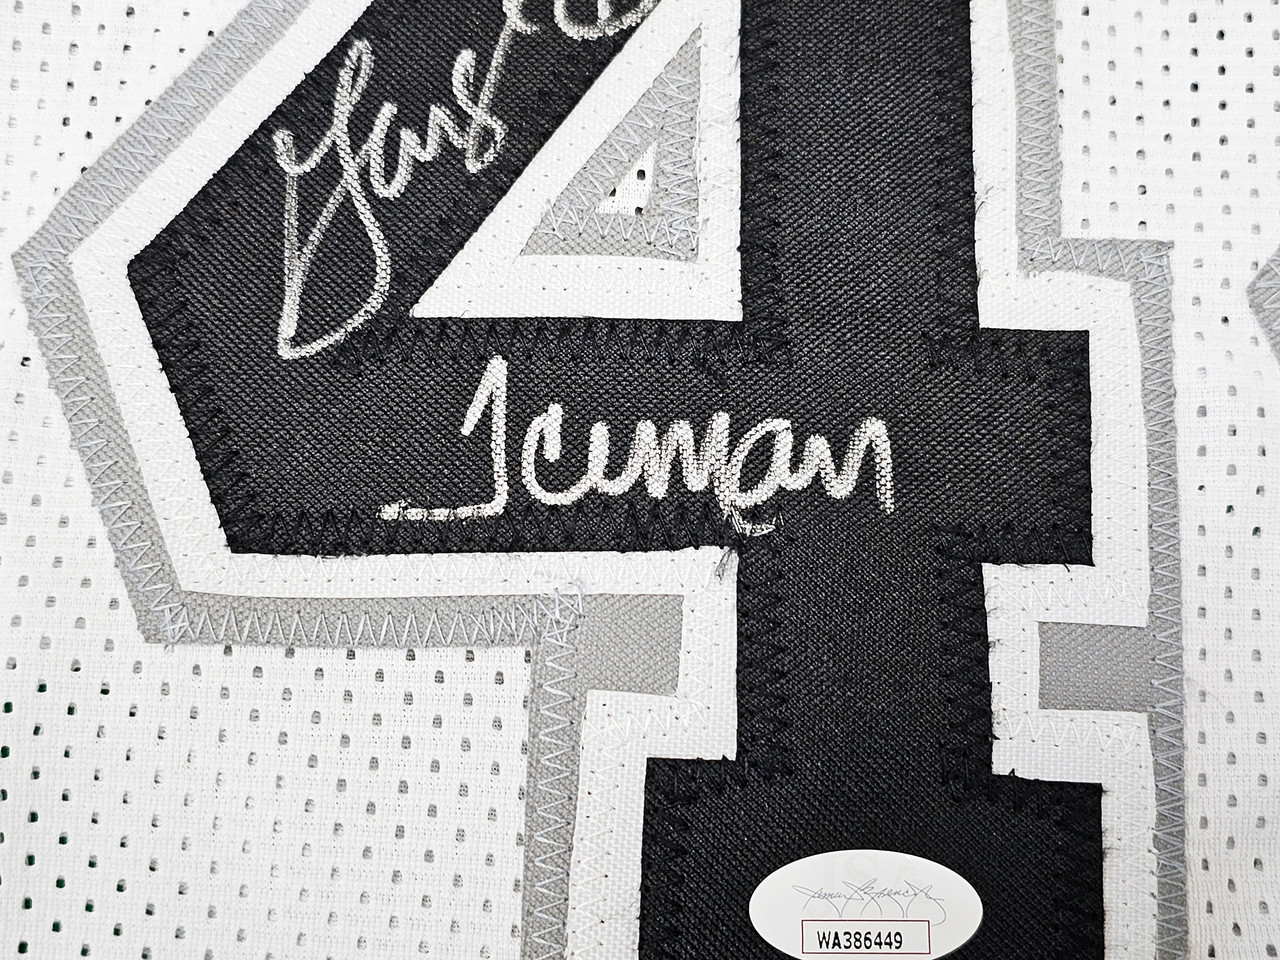 RSA George Gervin Signed Iceman Inscription San Antonio Black Basketball Jersey (Beckett)